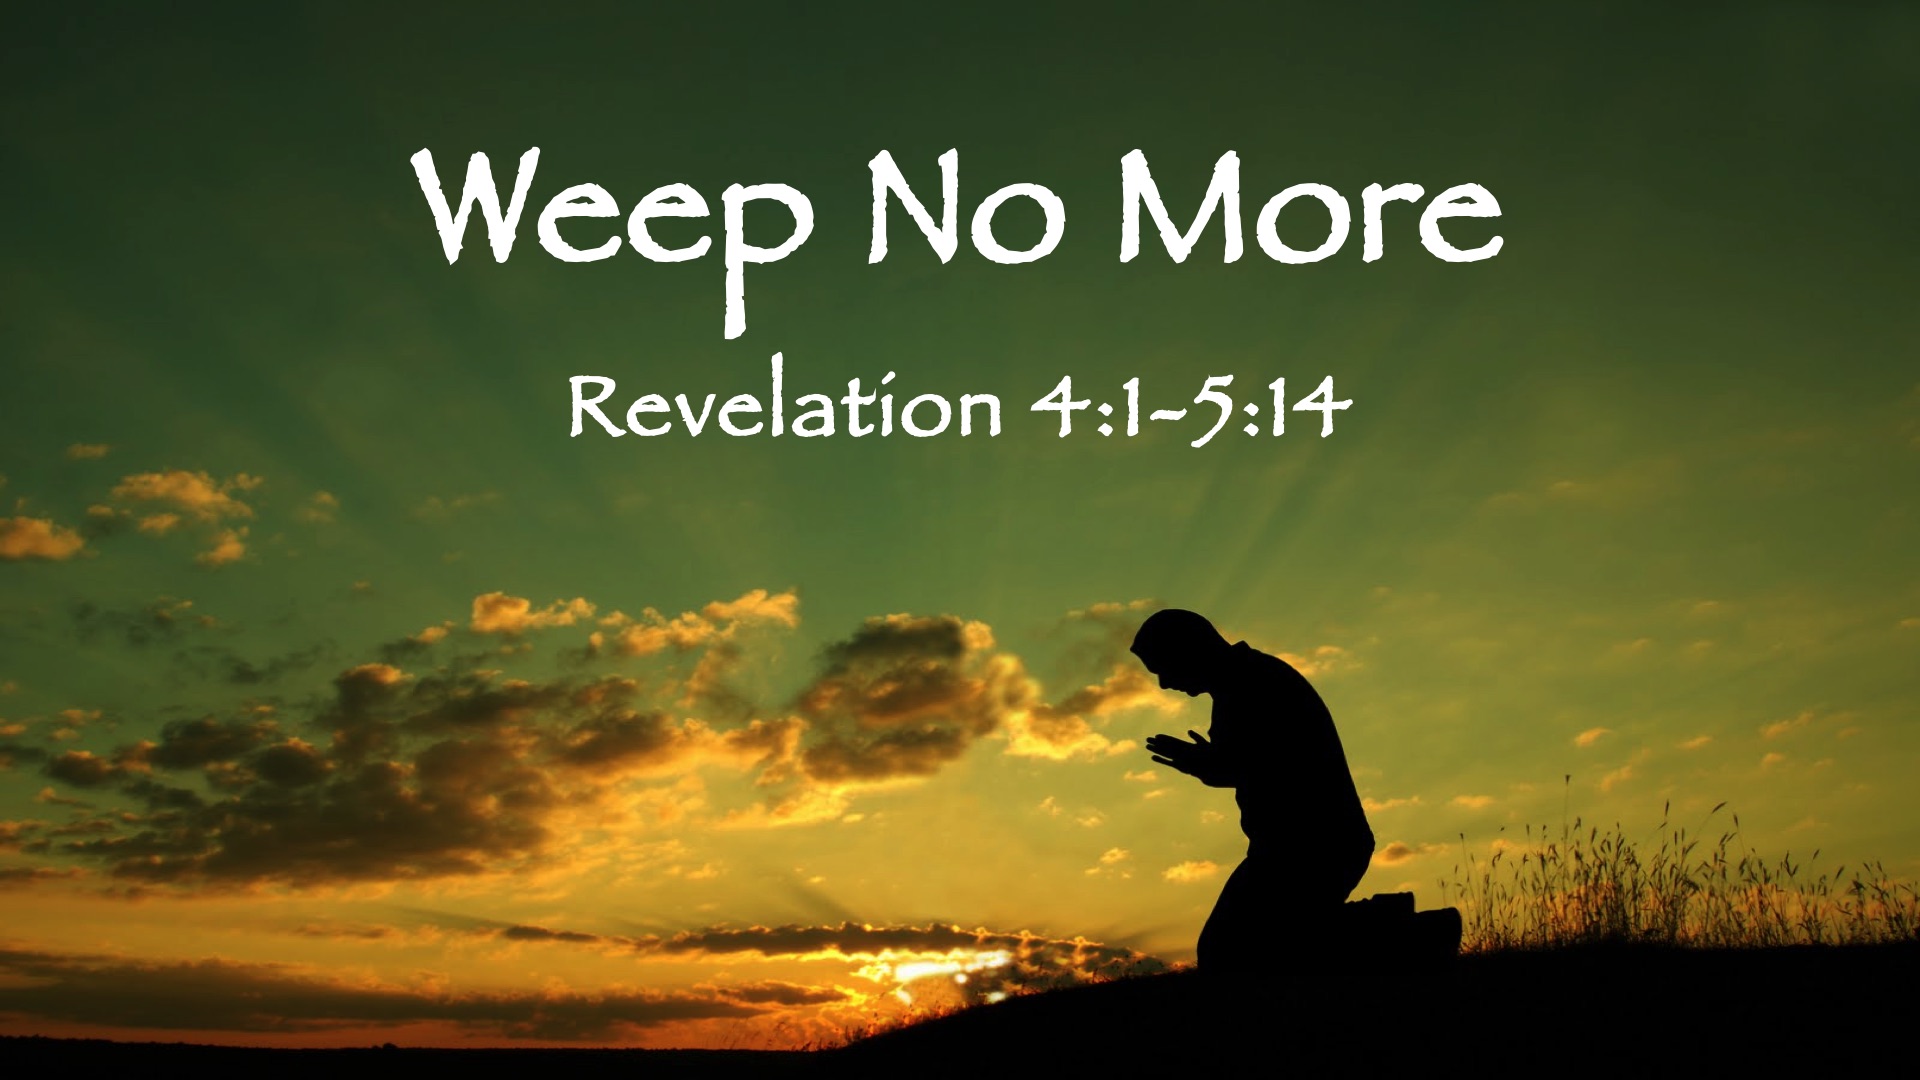 “Weep No More”